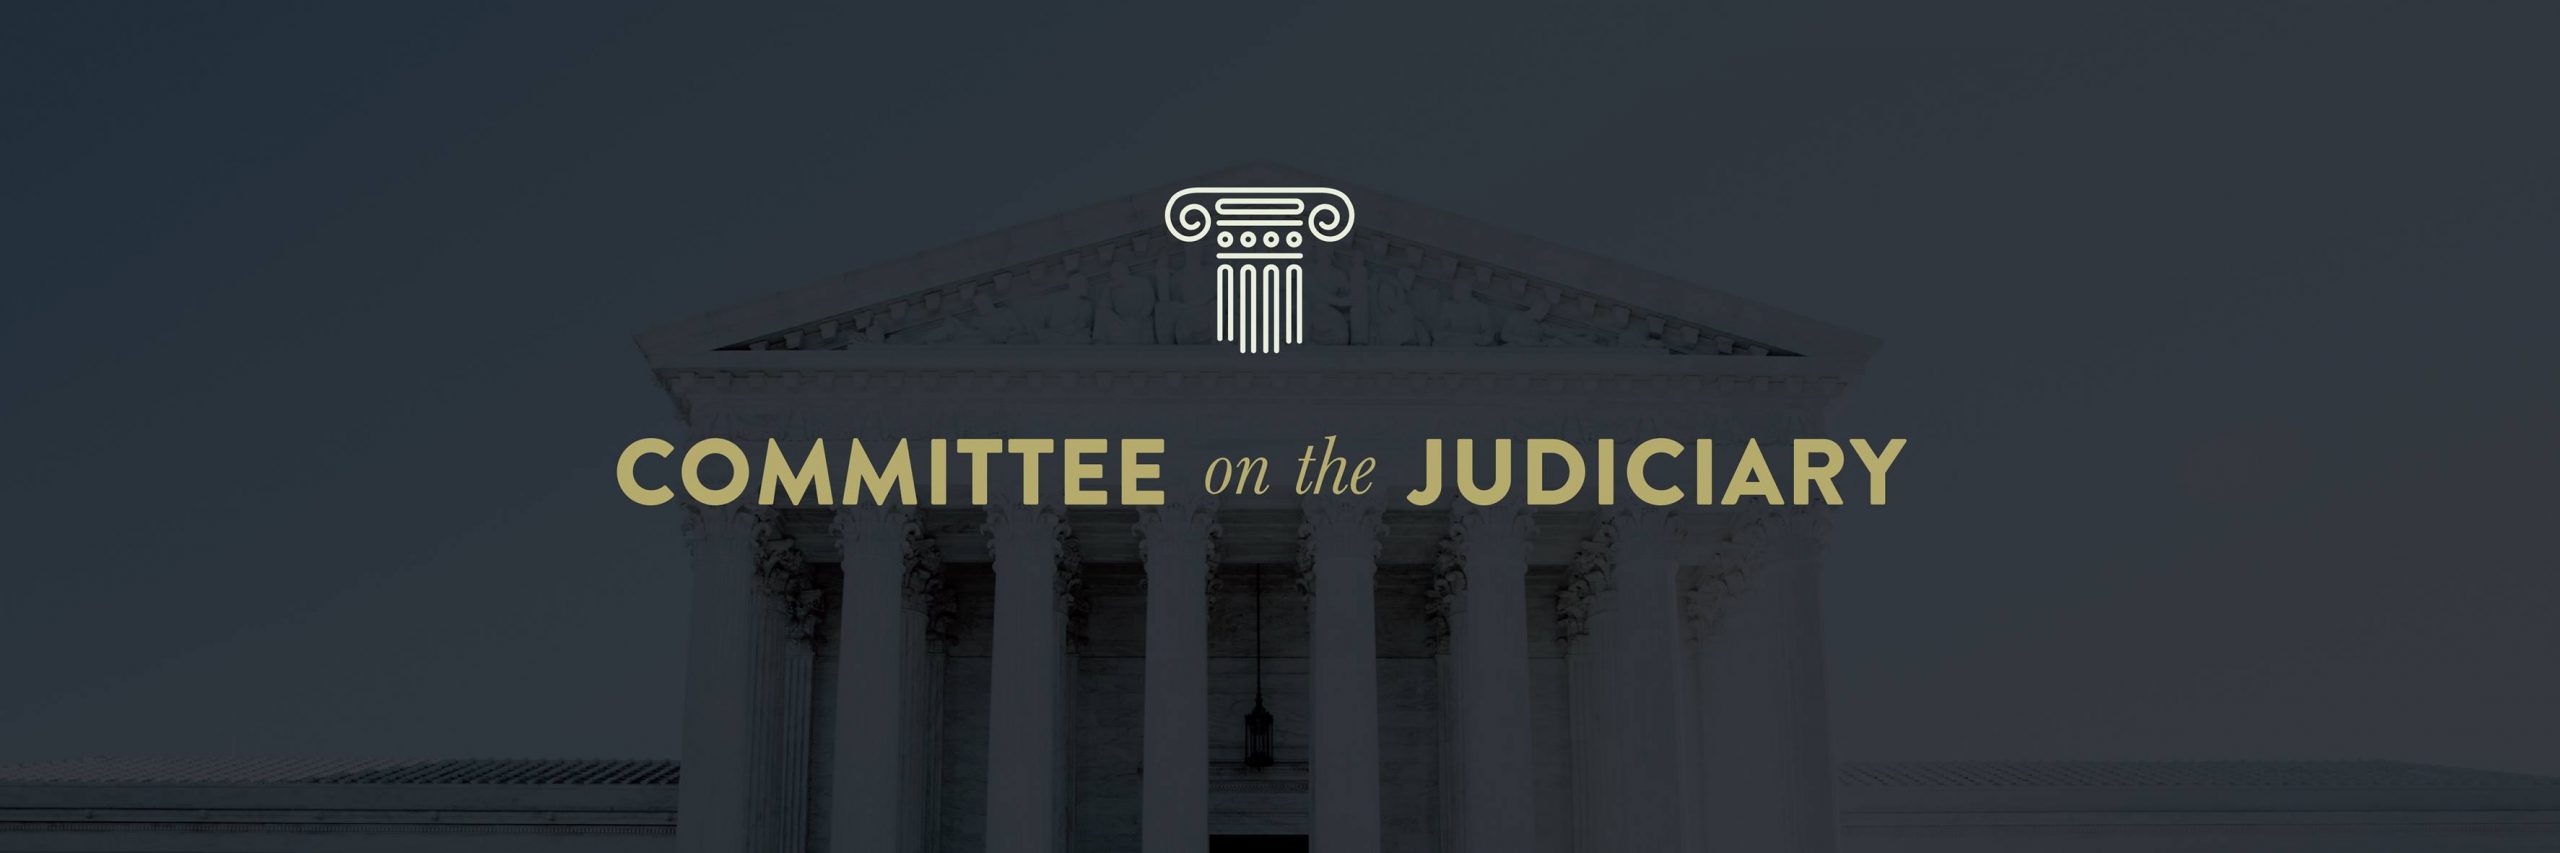 Senate Judiciary Committee Banner